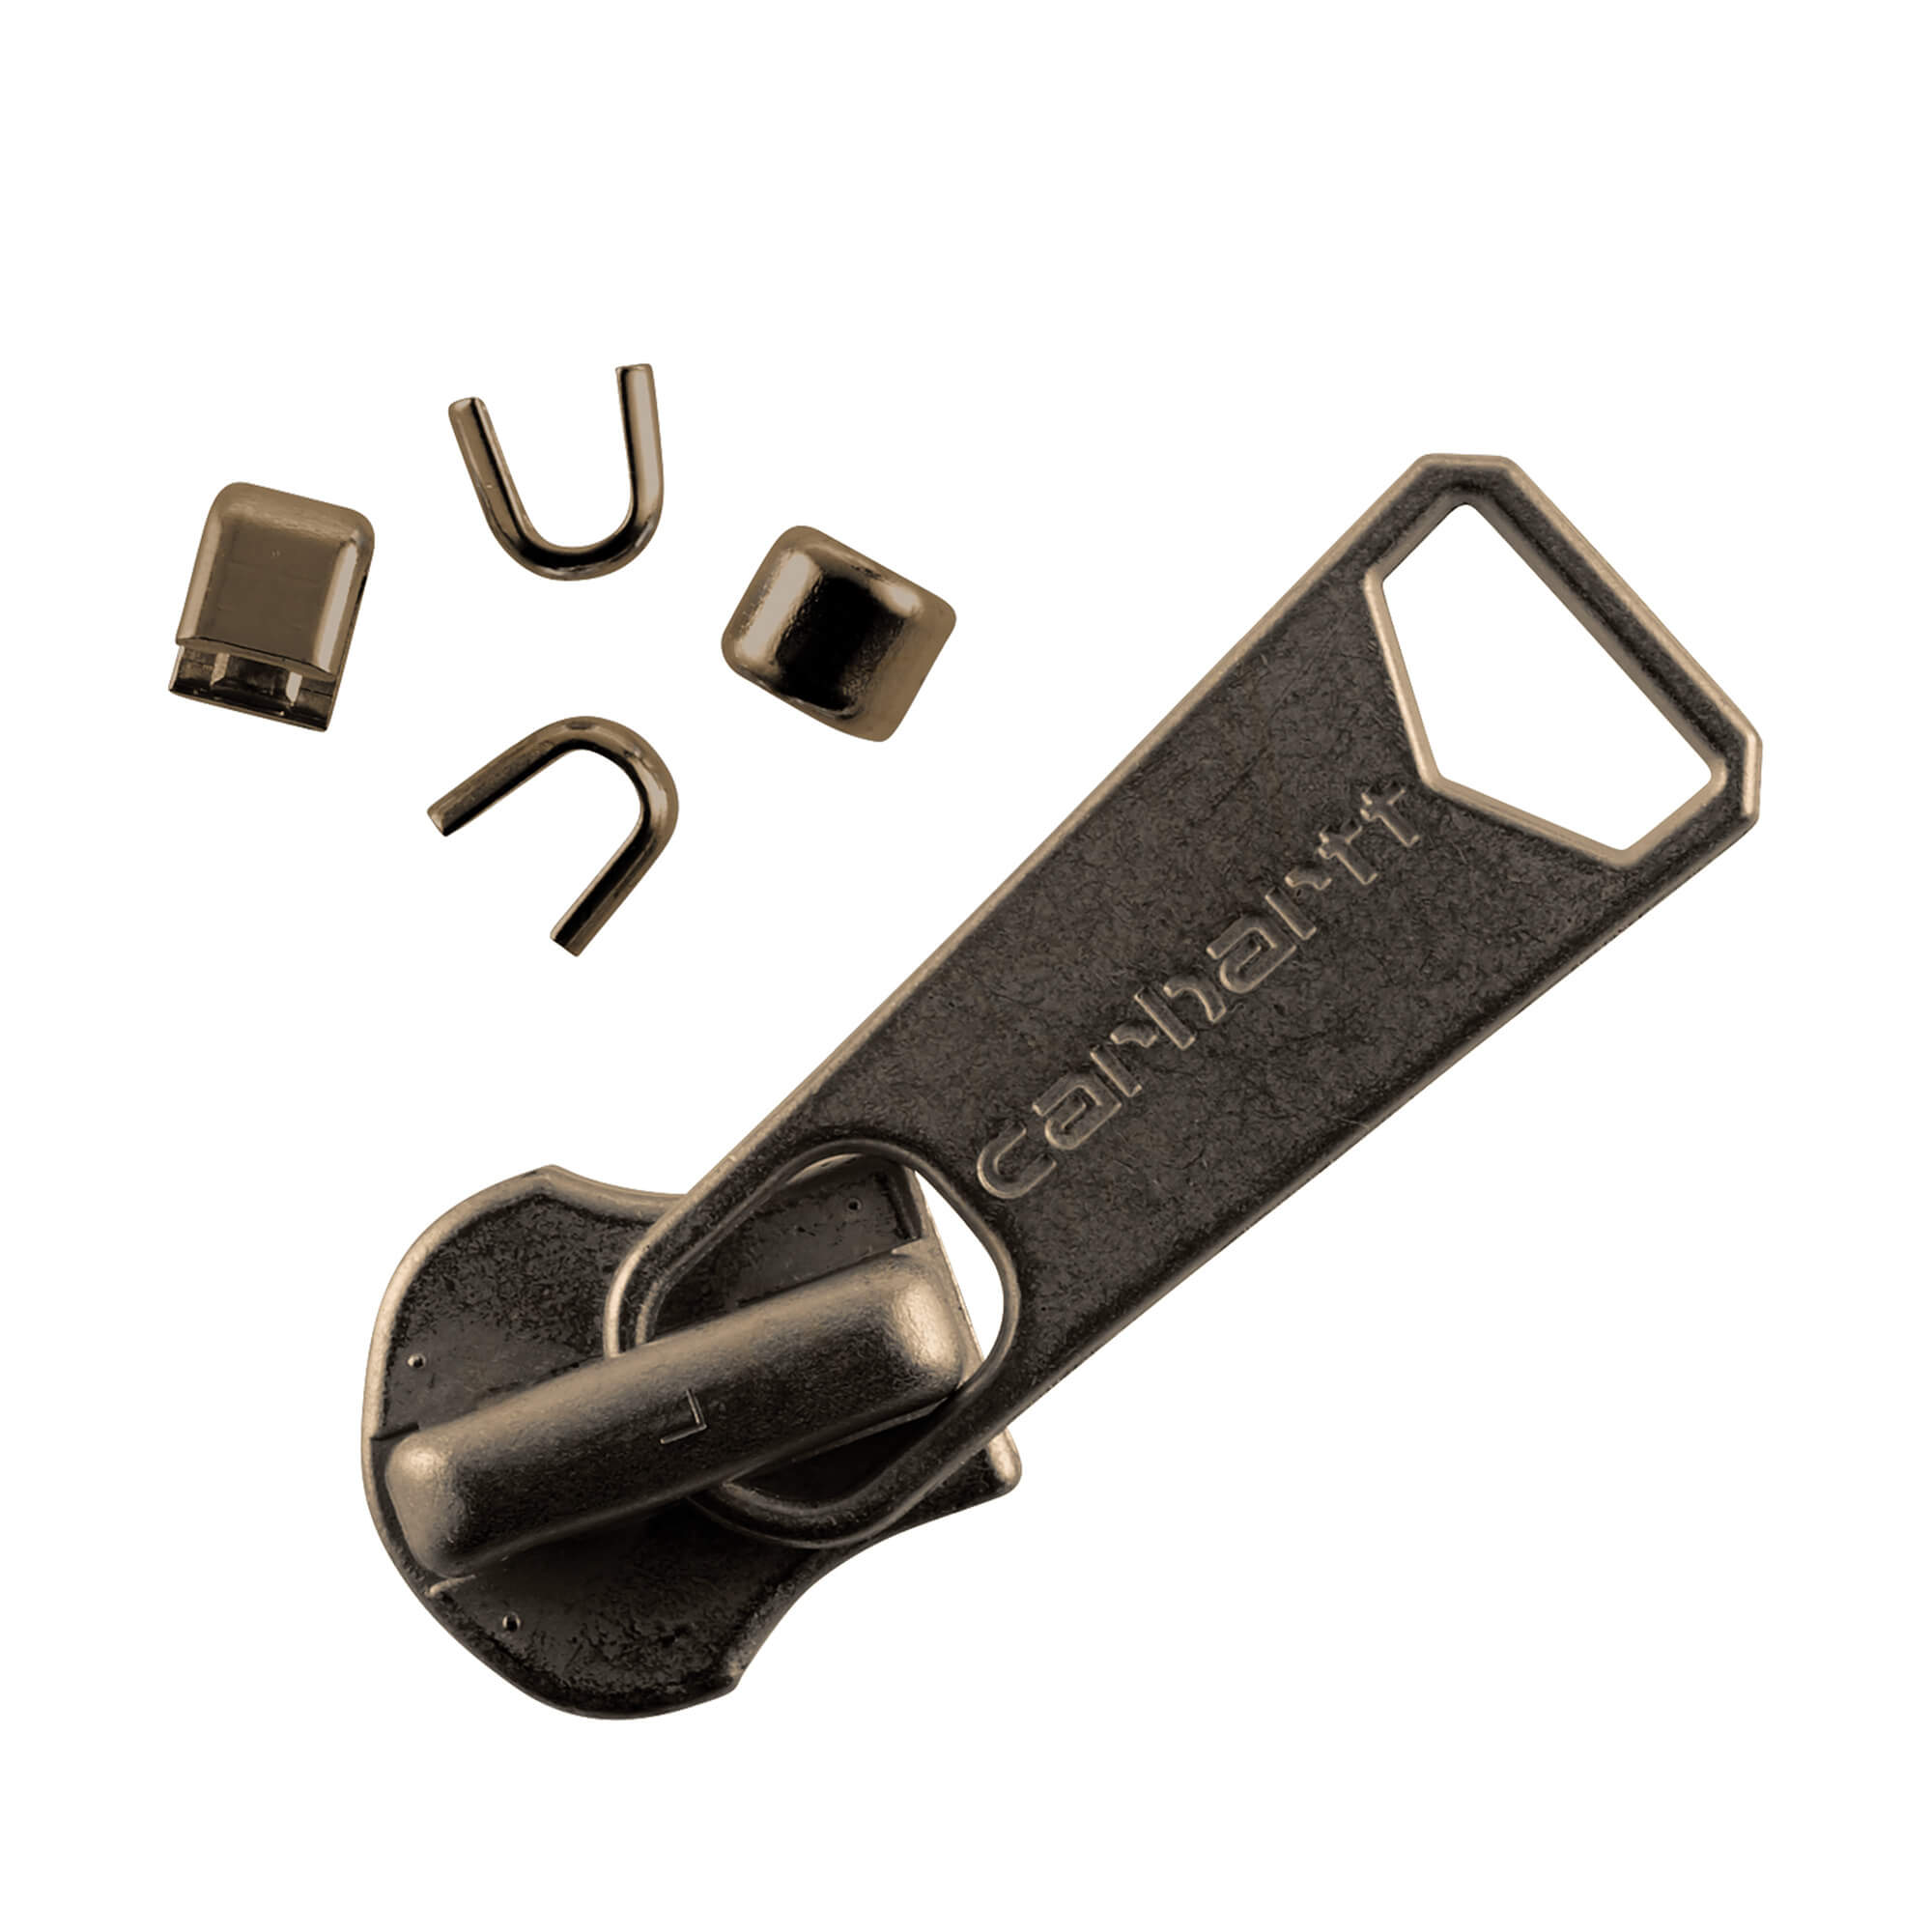 105598 - Carhartt No.10 Zipper Slider Repair Kit